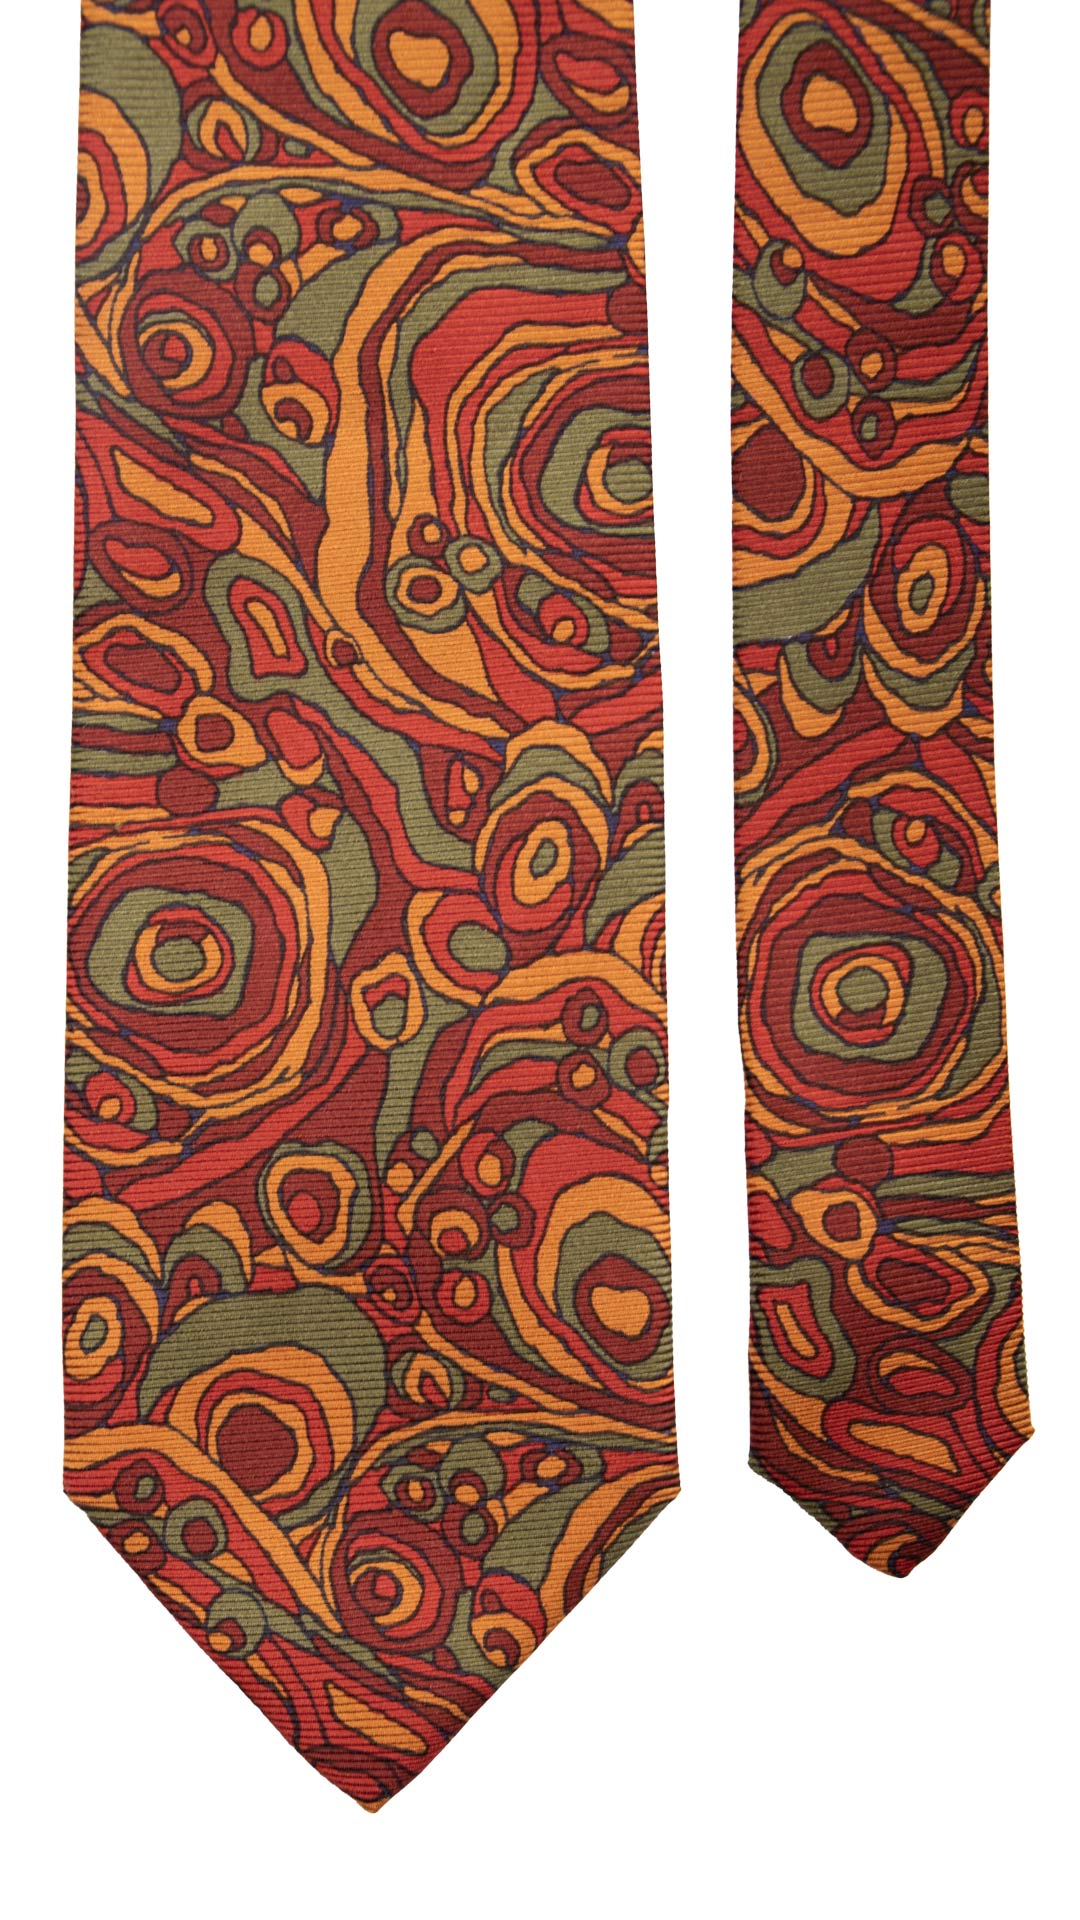 Cravatta Vintage in Saia di Seta Fantasia Verde Bordeaux Arancione CV770 Pala